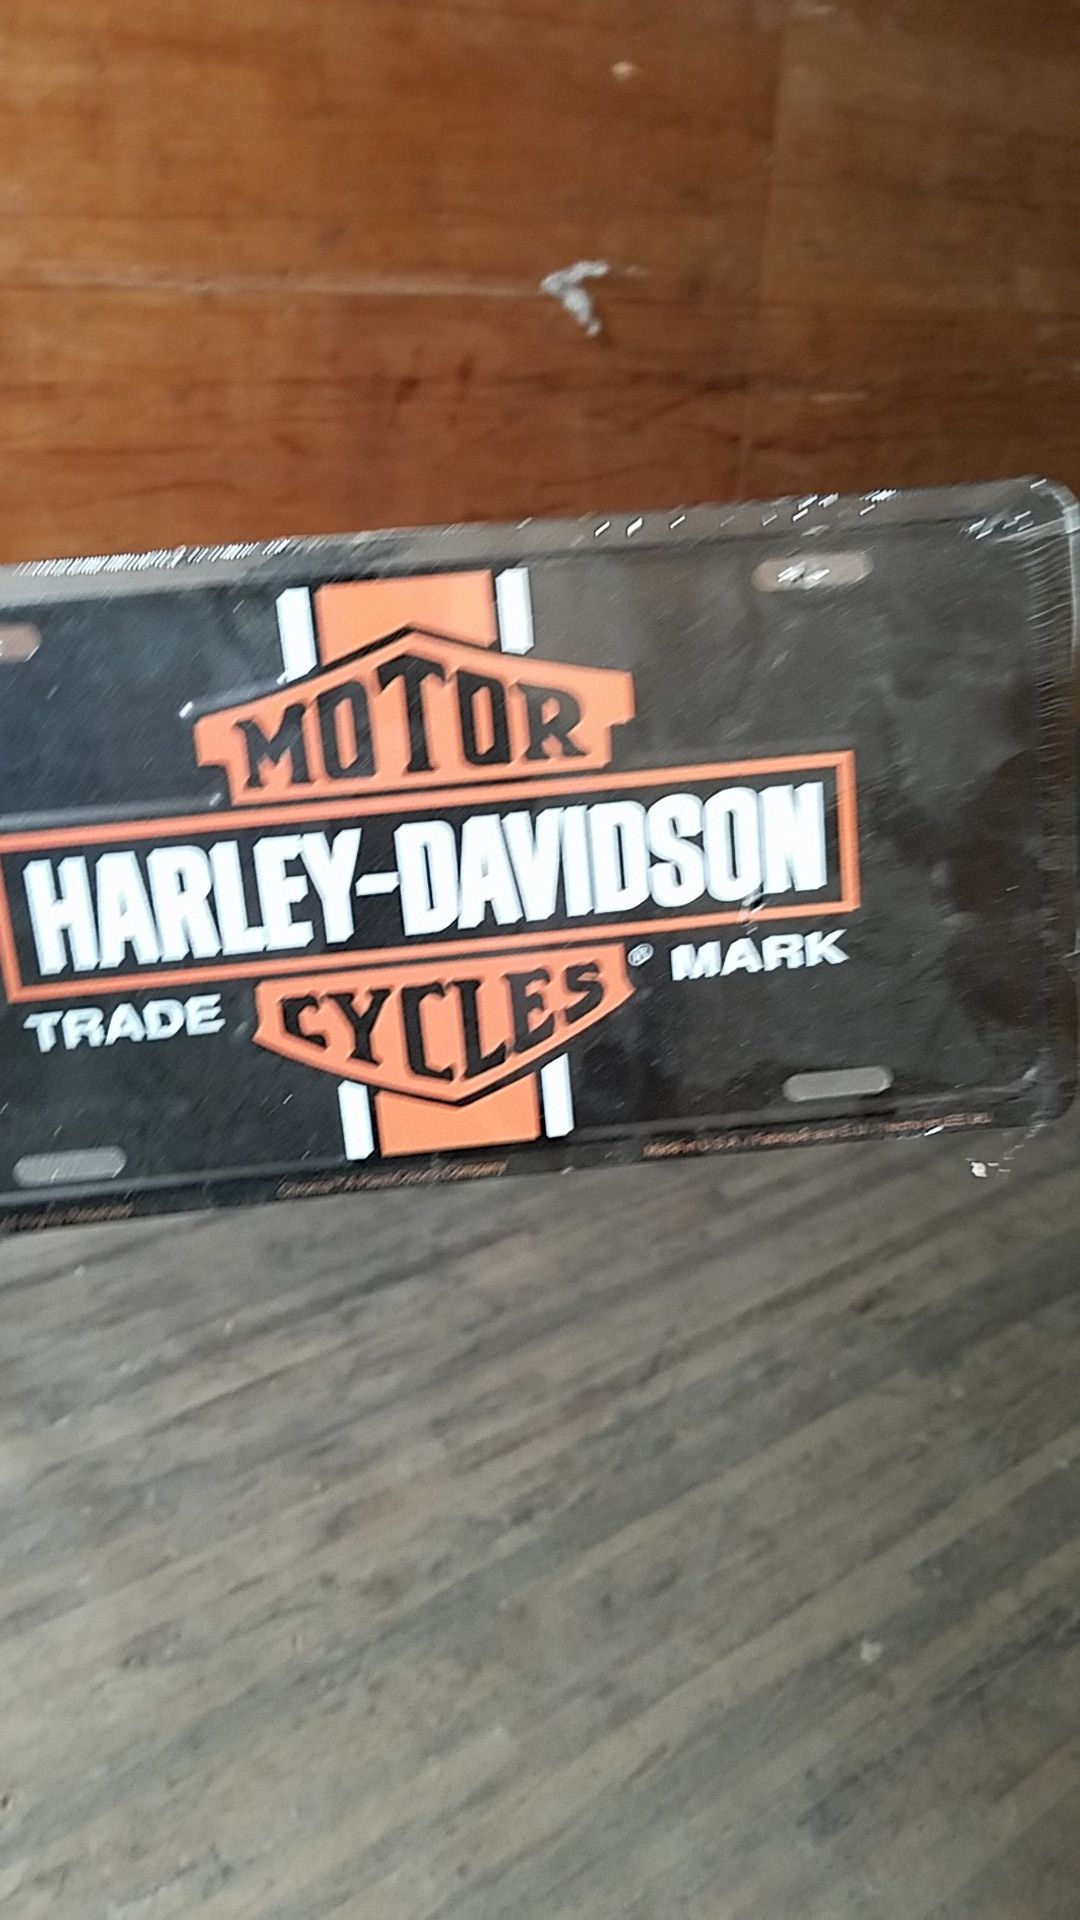 Harley davidson license plate